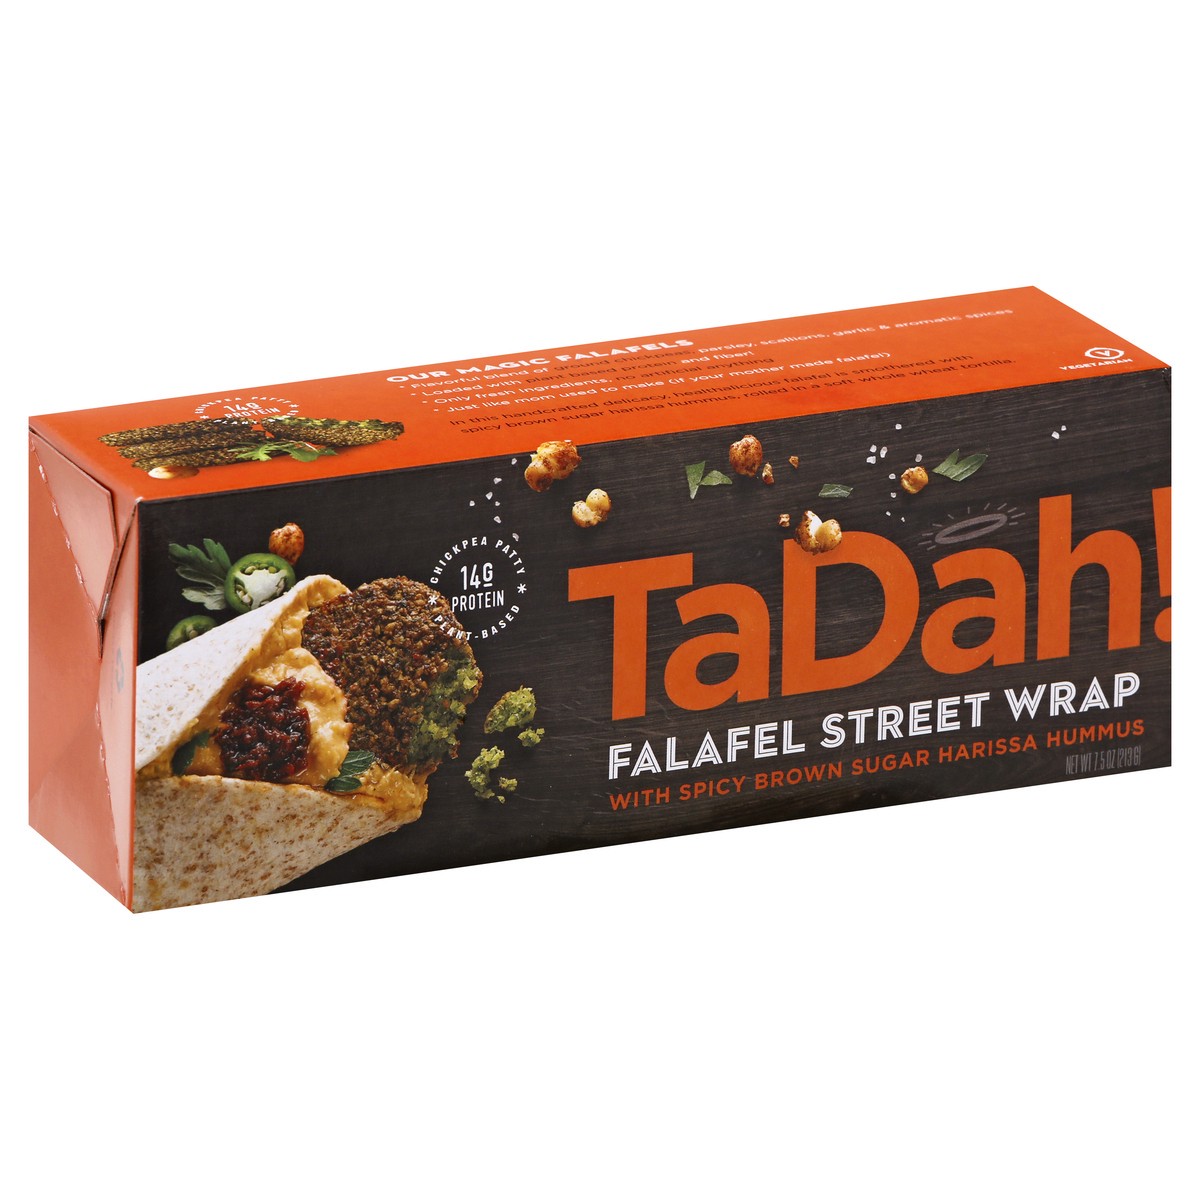 slide 7 of 13, Tadah! with Spicy Brown Sugar Harissa Hummus Falafel Street Wrap 7.5 oz, 7.5 oz